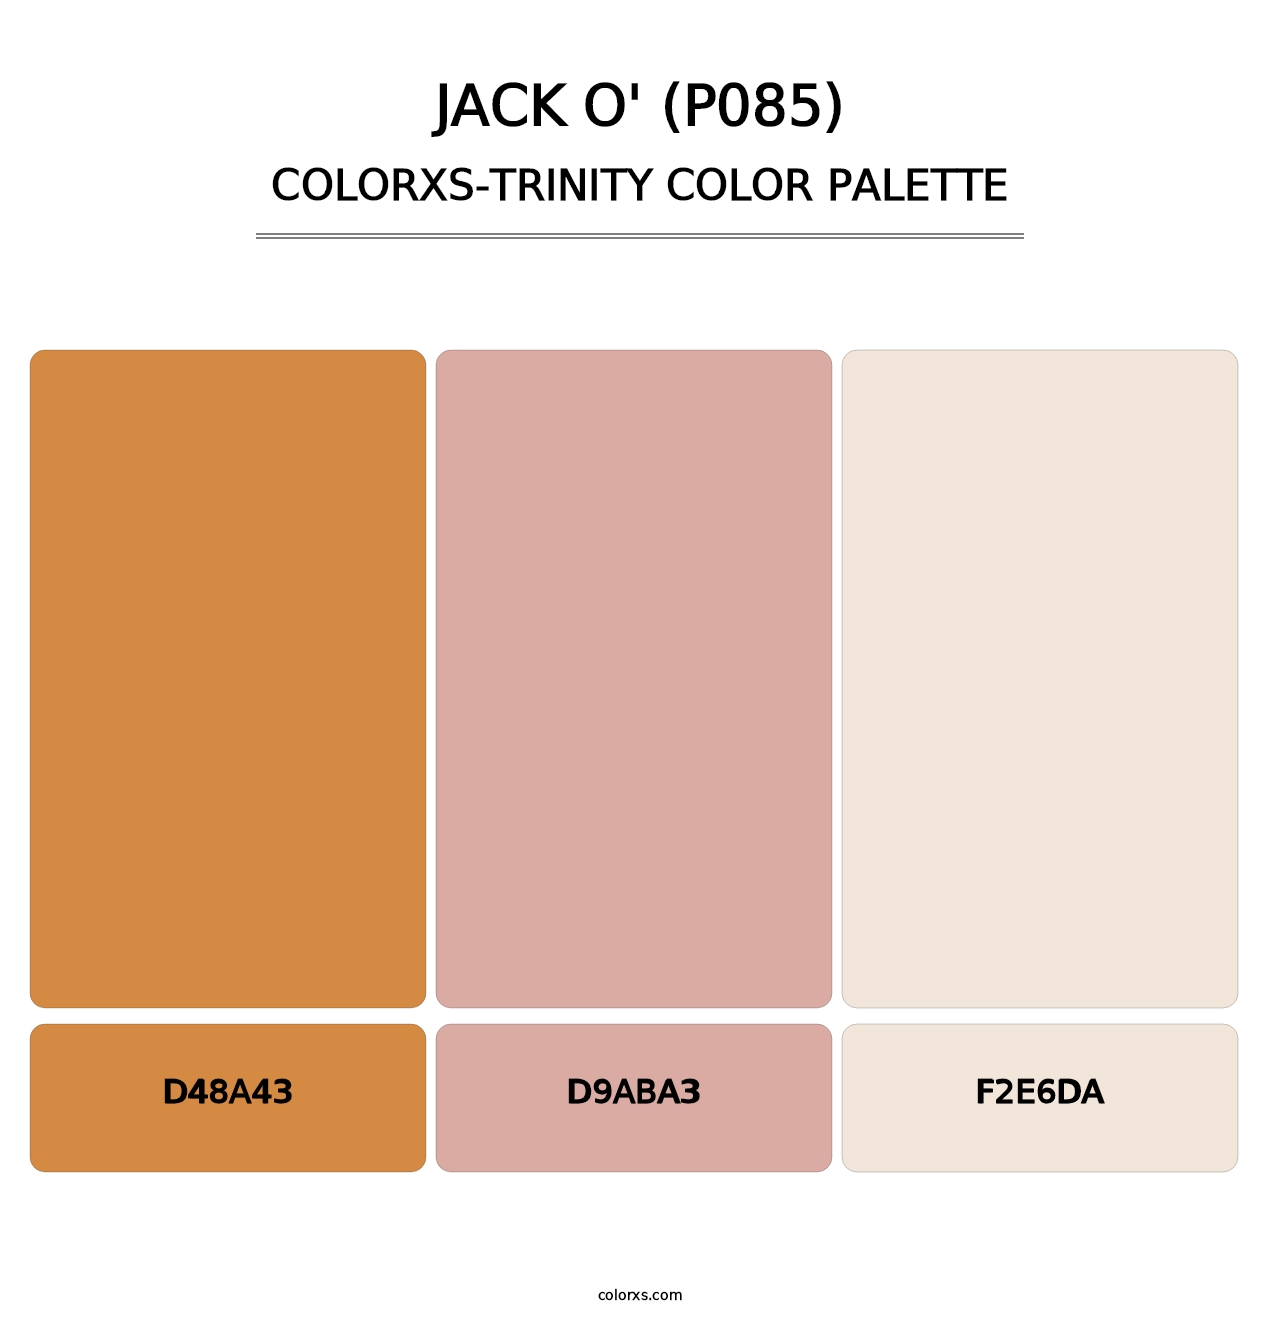 Jack O' (P085) - Colorxs Trinity Palette